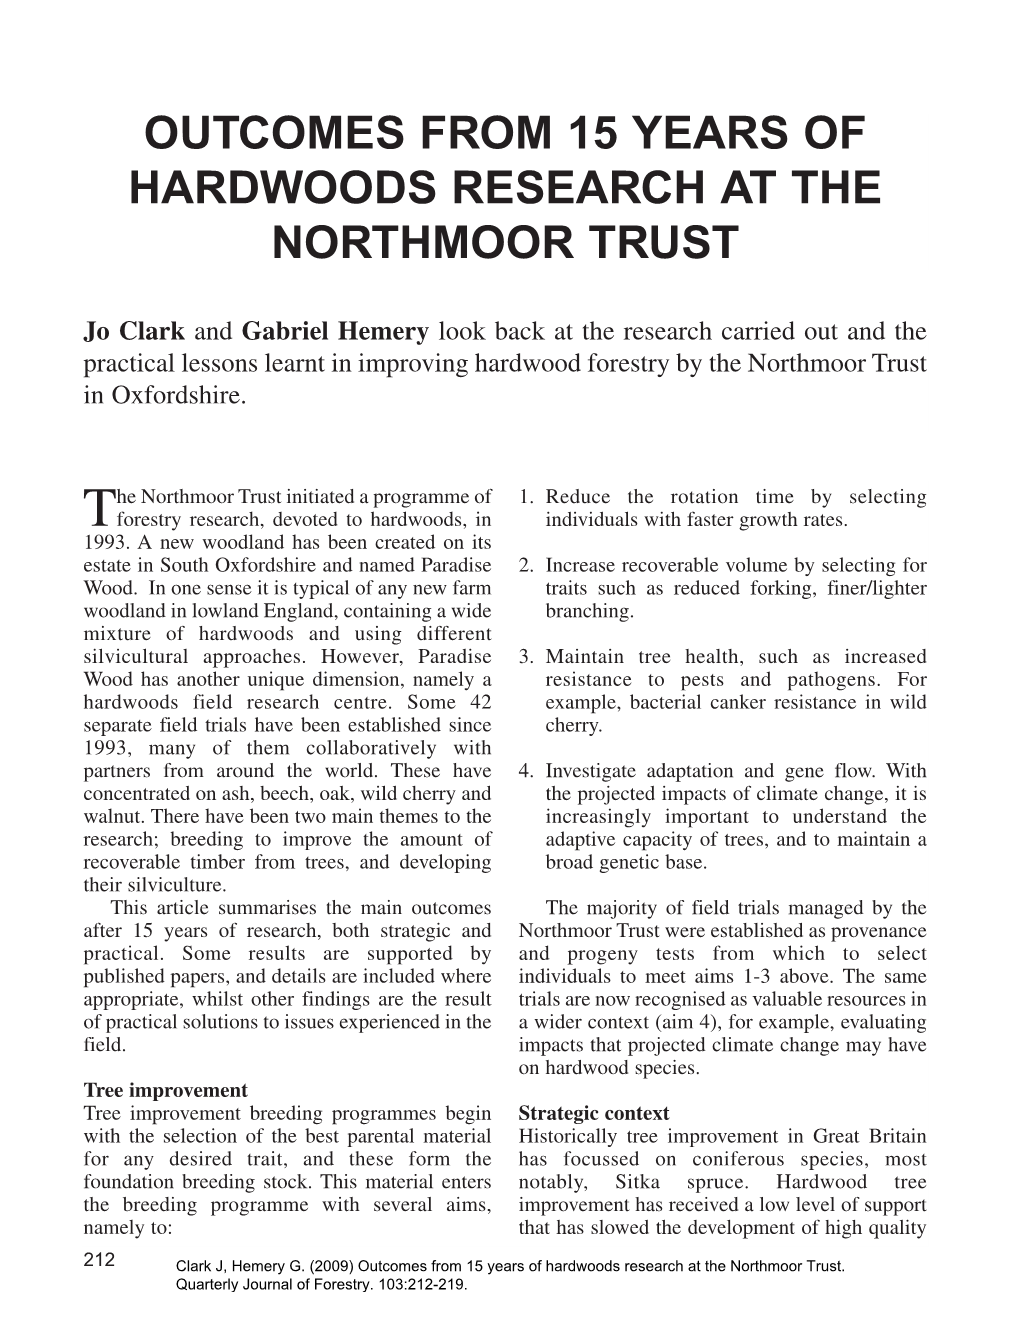 Fifteen Years of Hardwoods Research